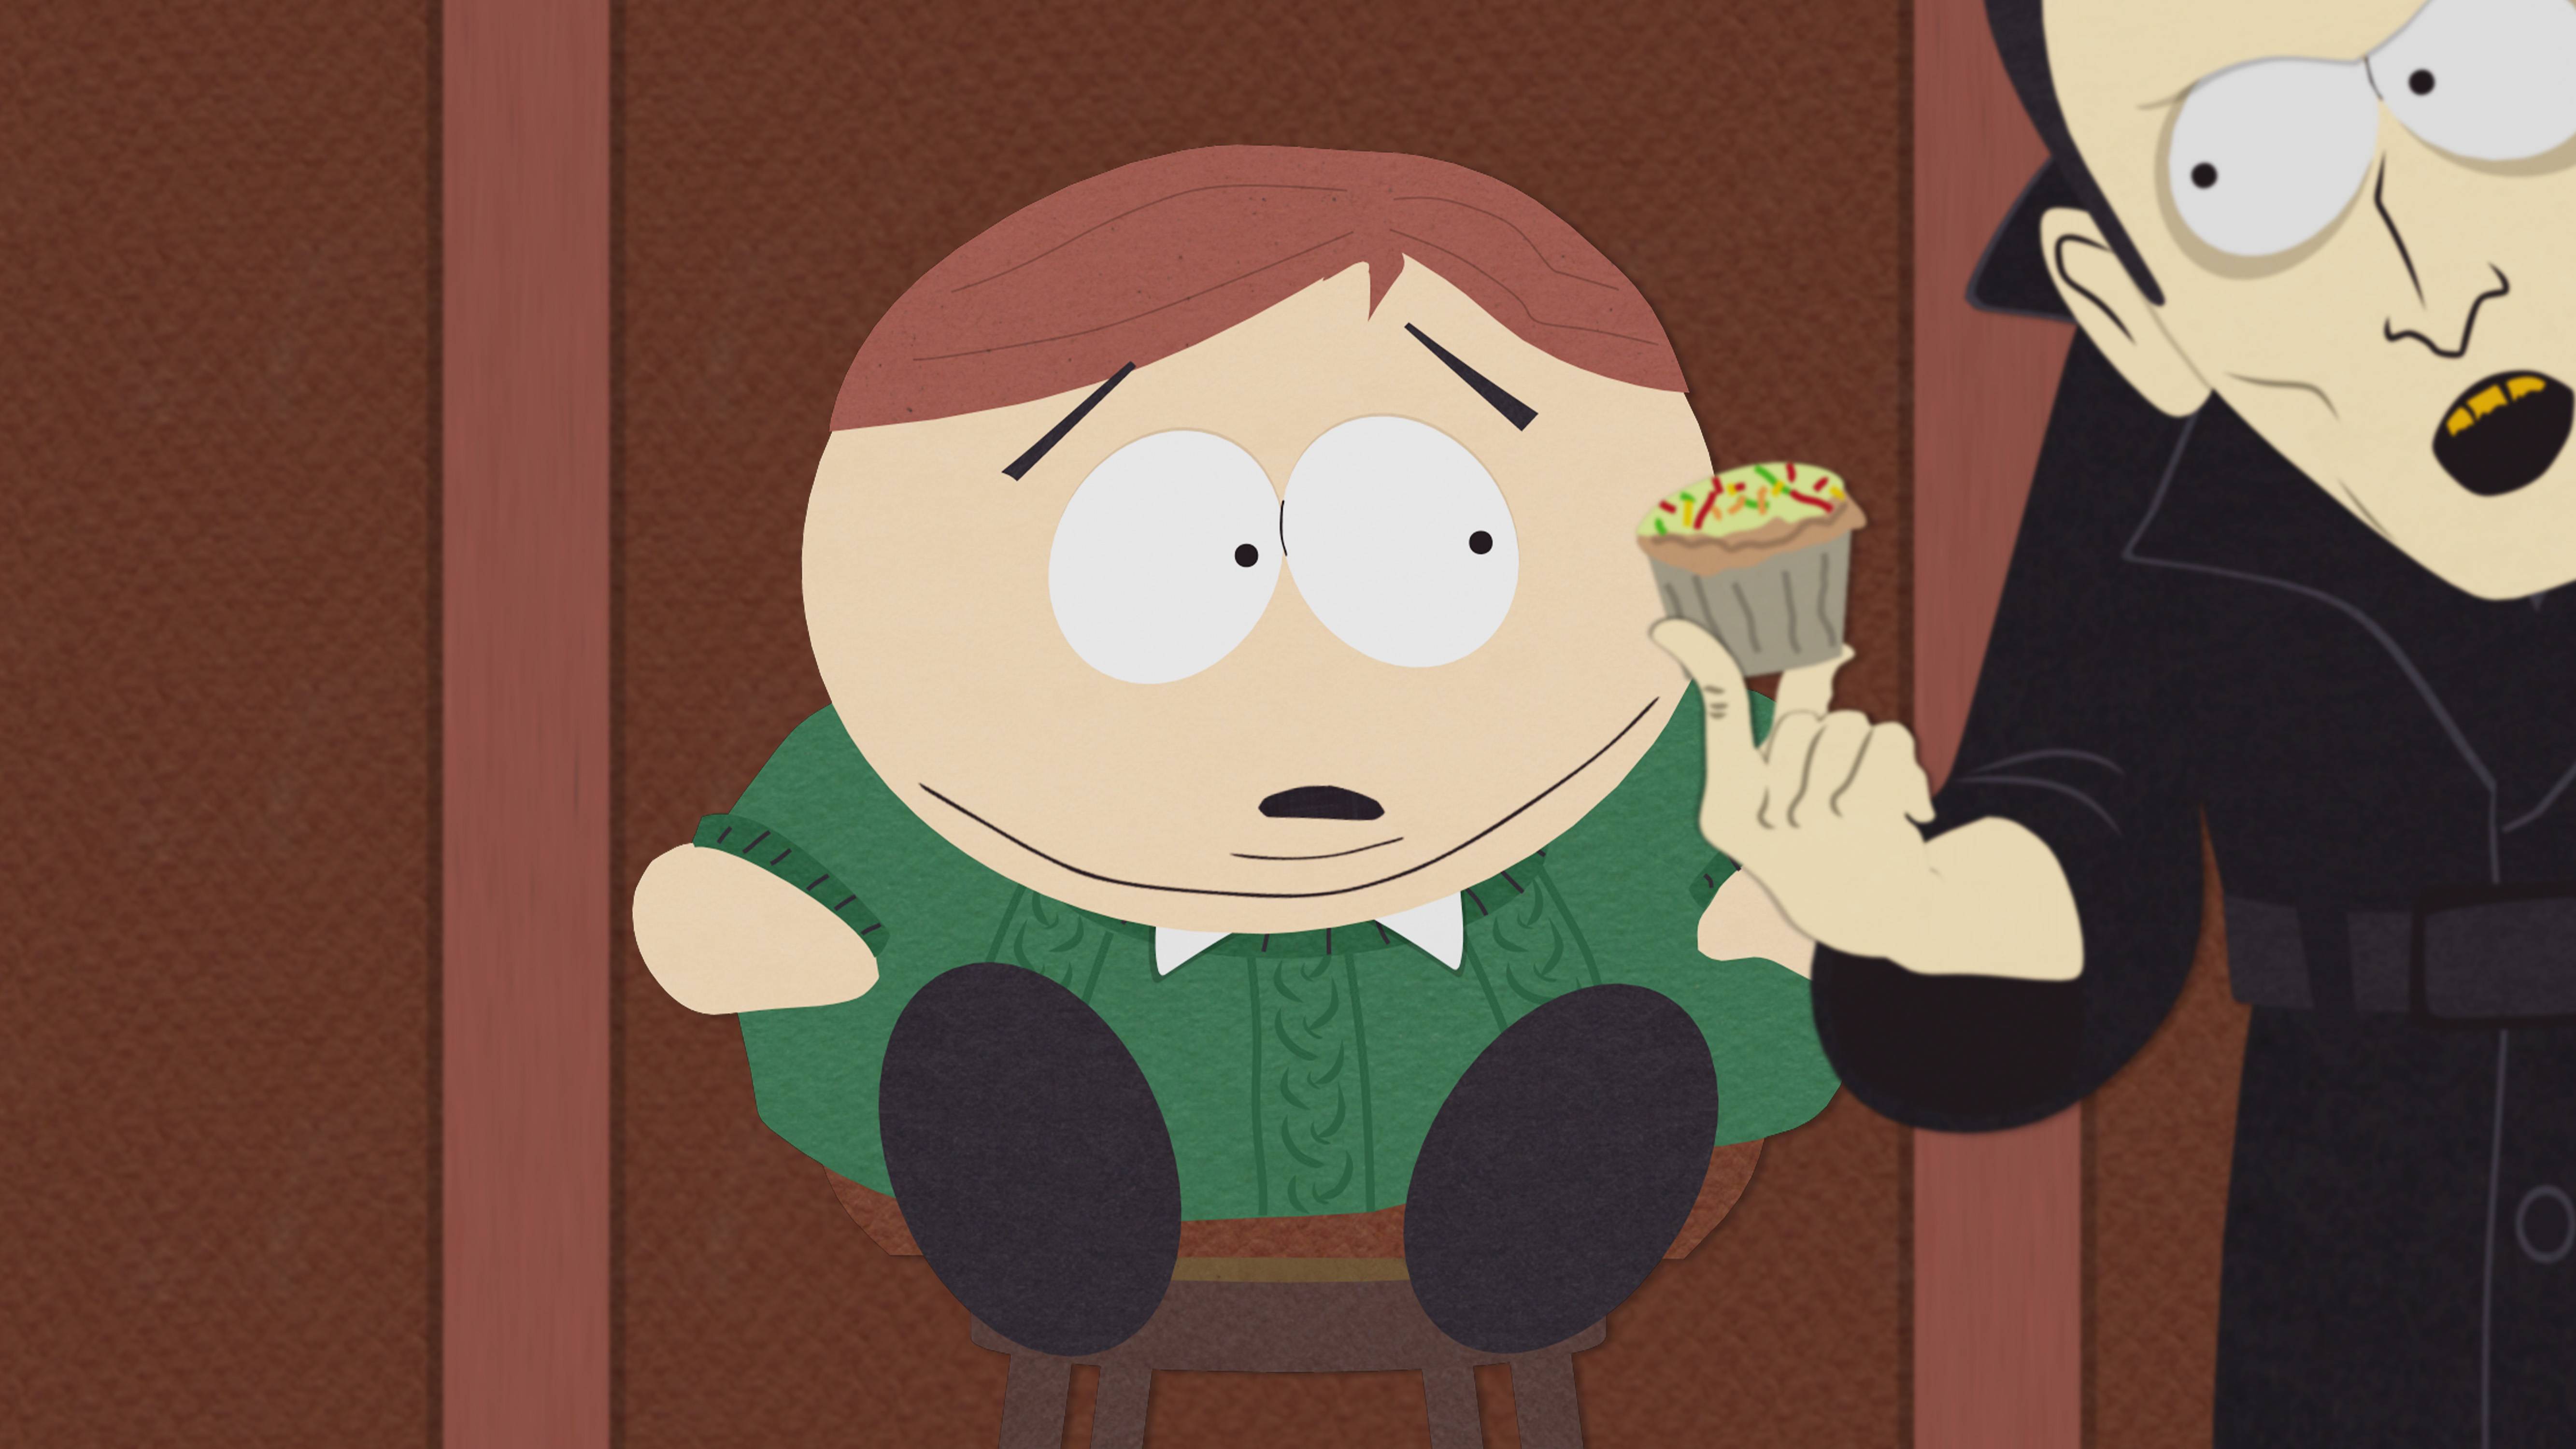 South Park Episode Combines Coney Island Hot Dog With Casa Bonita